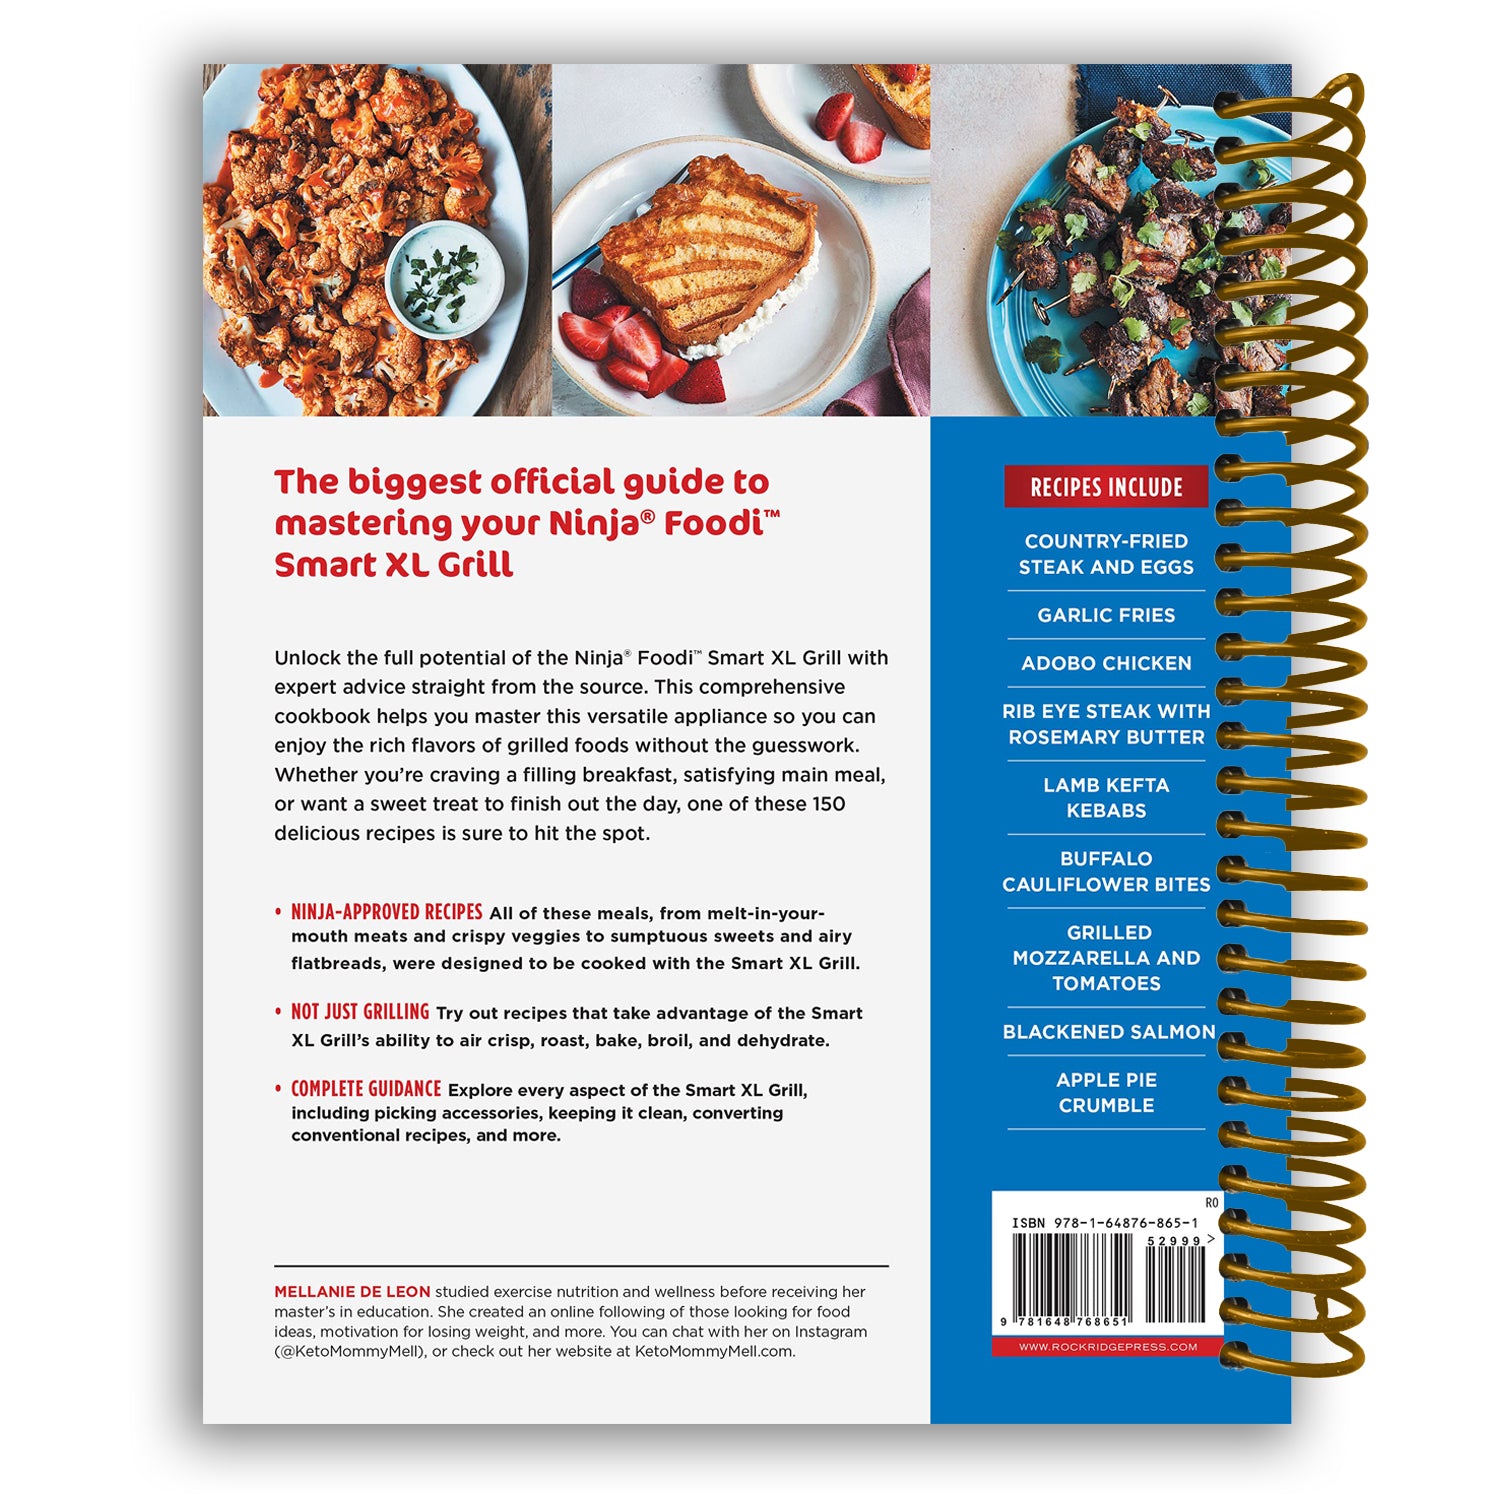 Ninja Foodi Smart XL Grill Cookbook: New Tasty Recipes for Beginners and Advanced Users [Book]